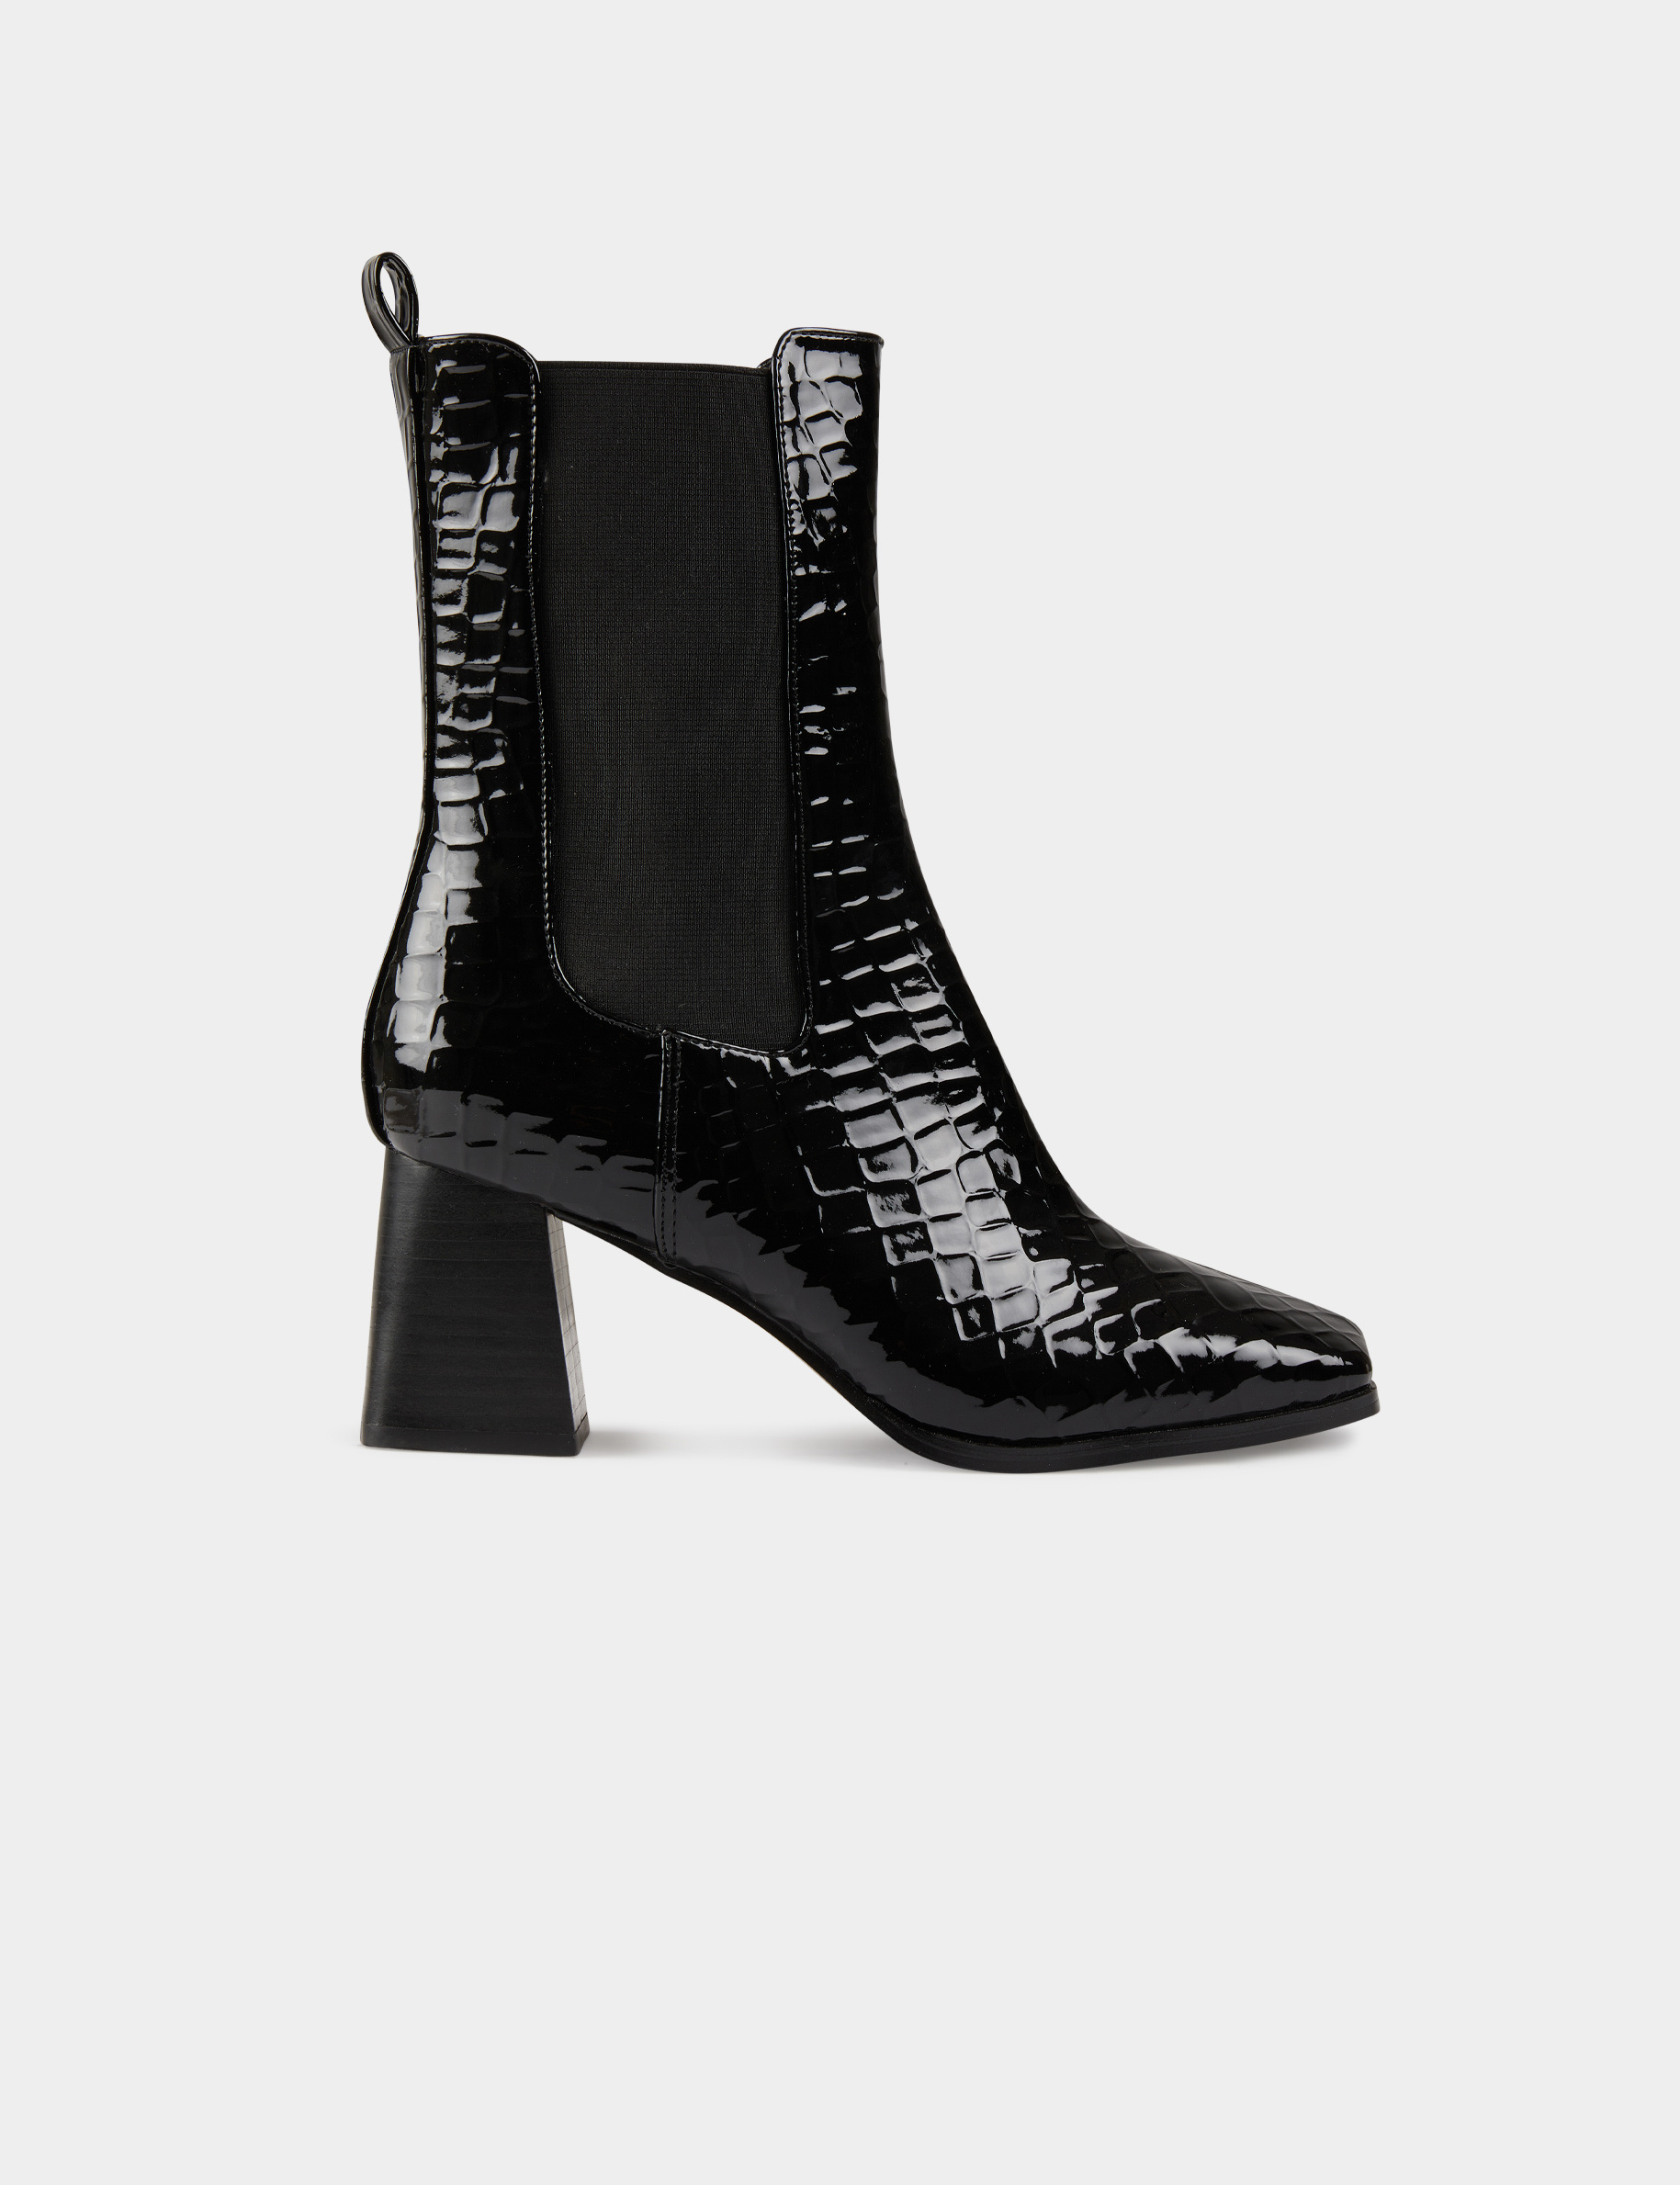 Patent croc effect boots with heels black ladies'